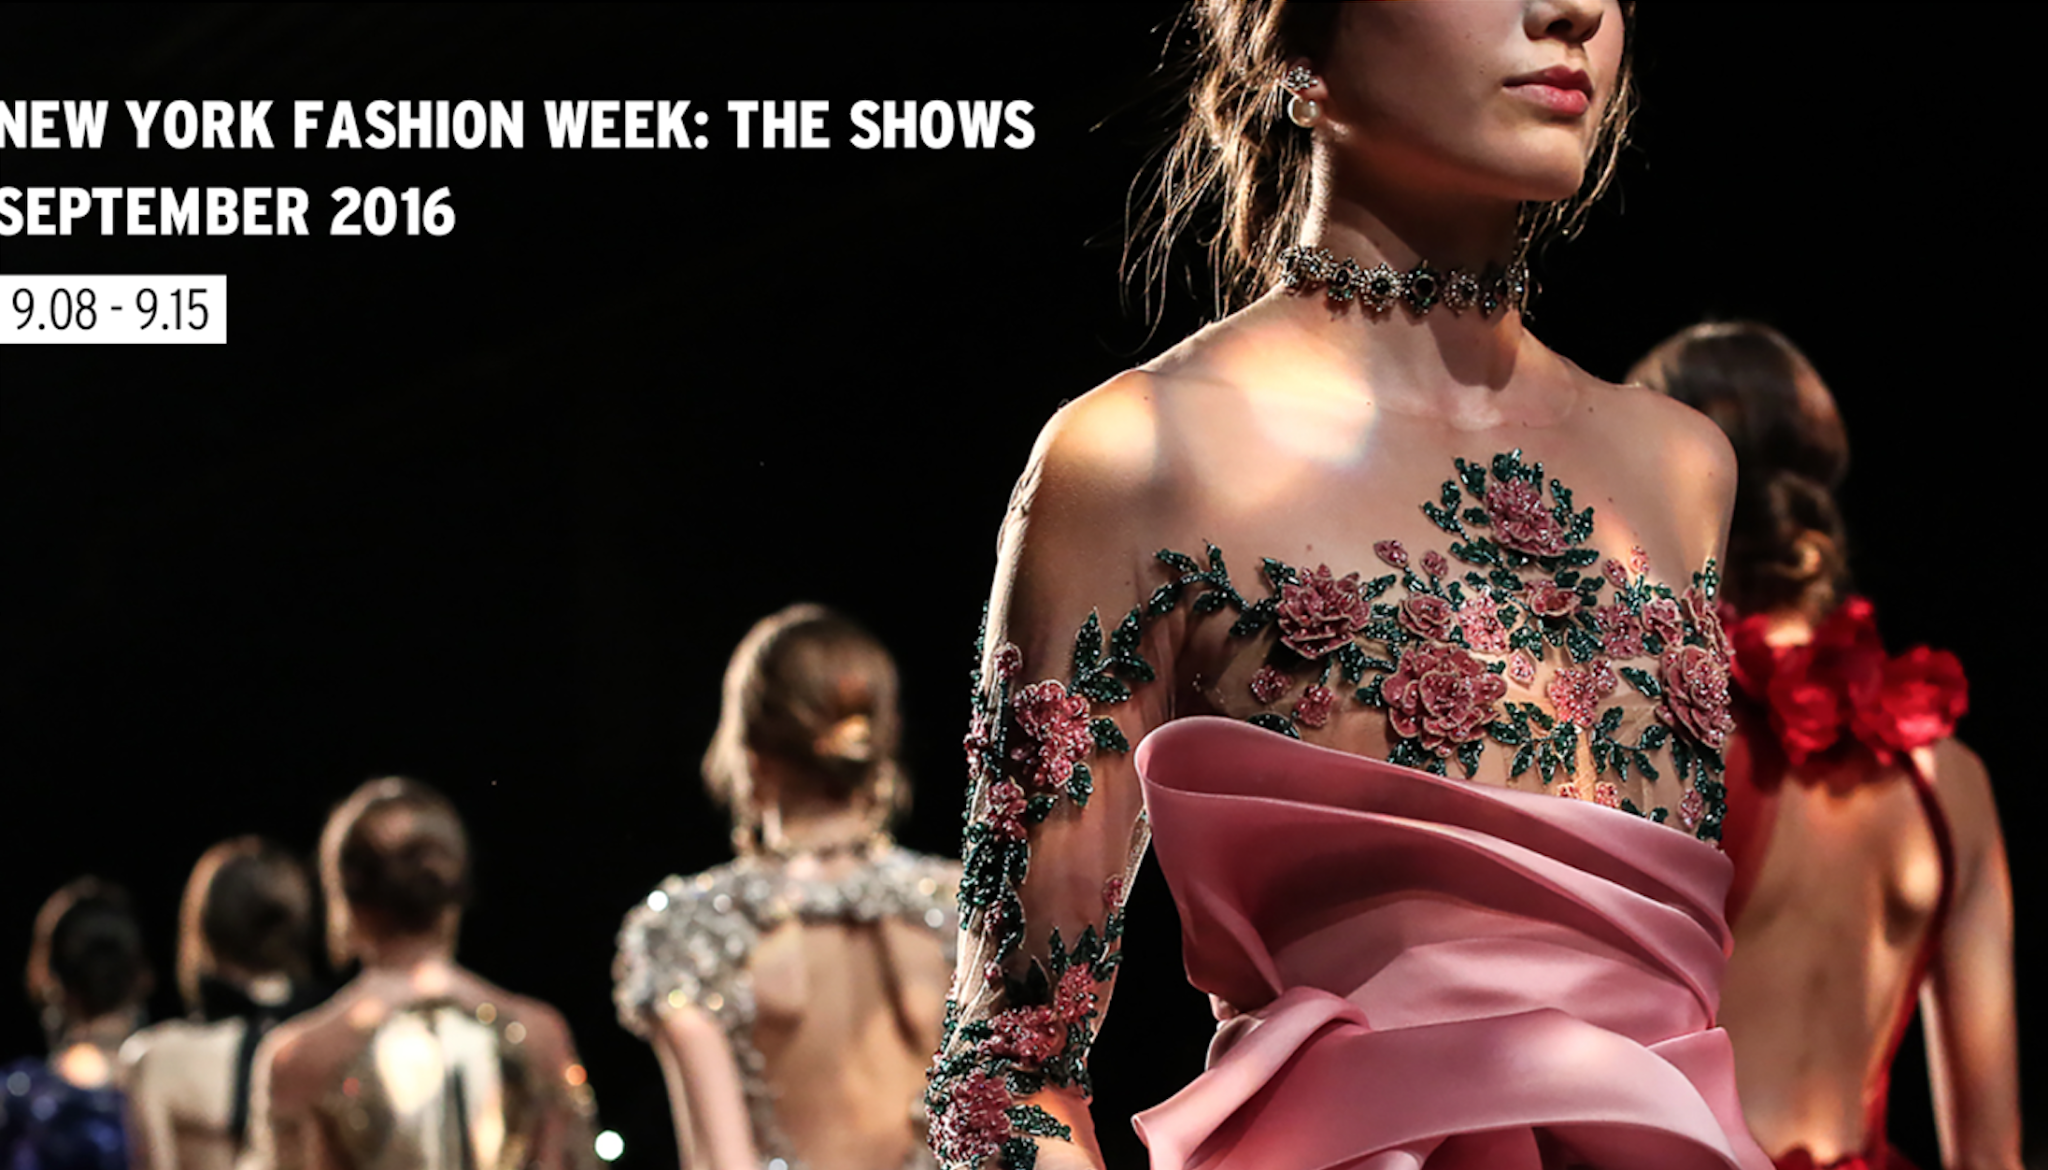 New York Fashion Week Changes Show Venue